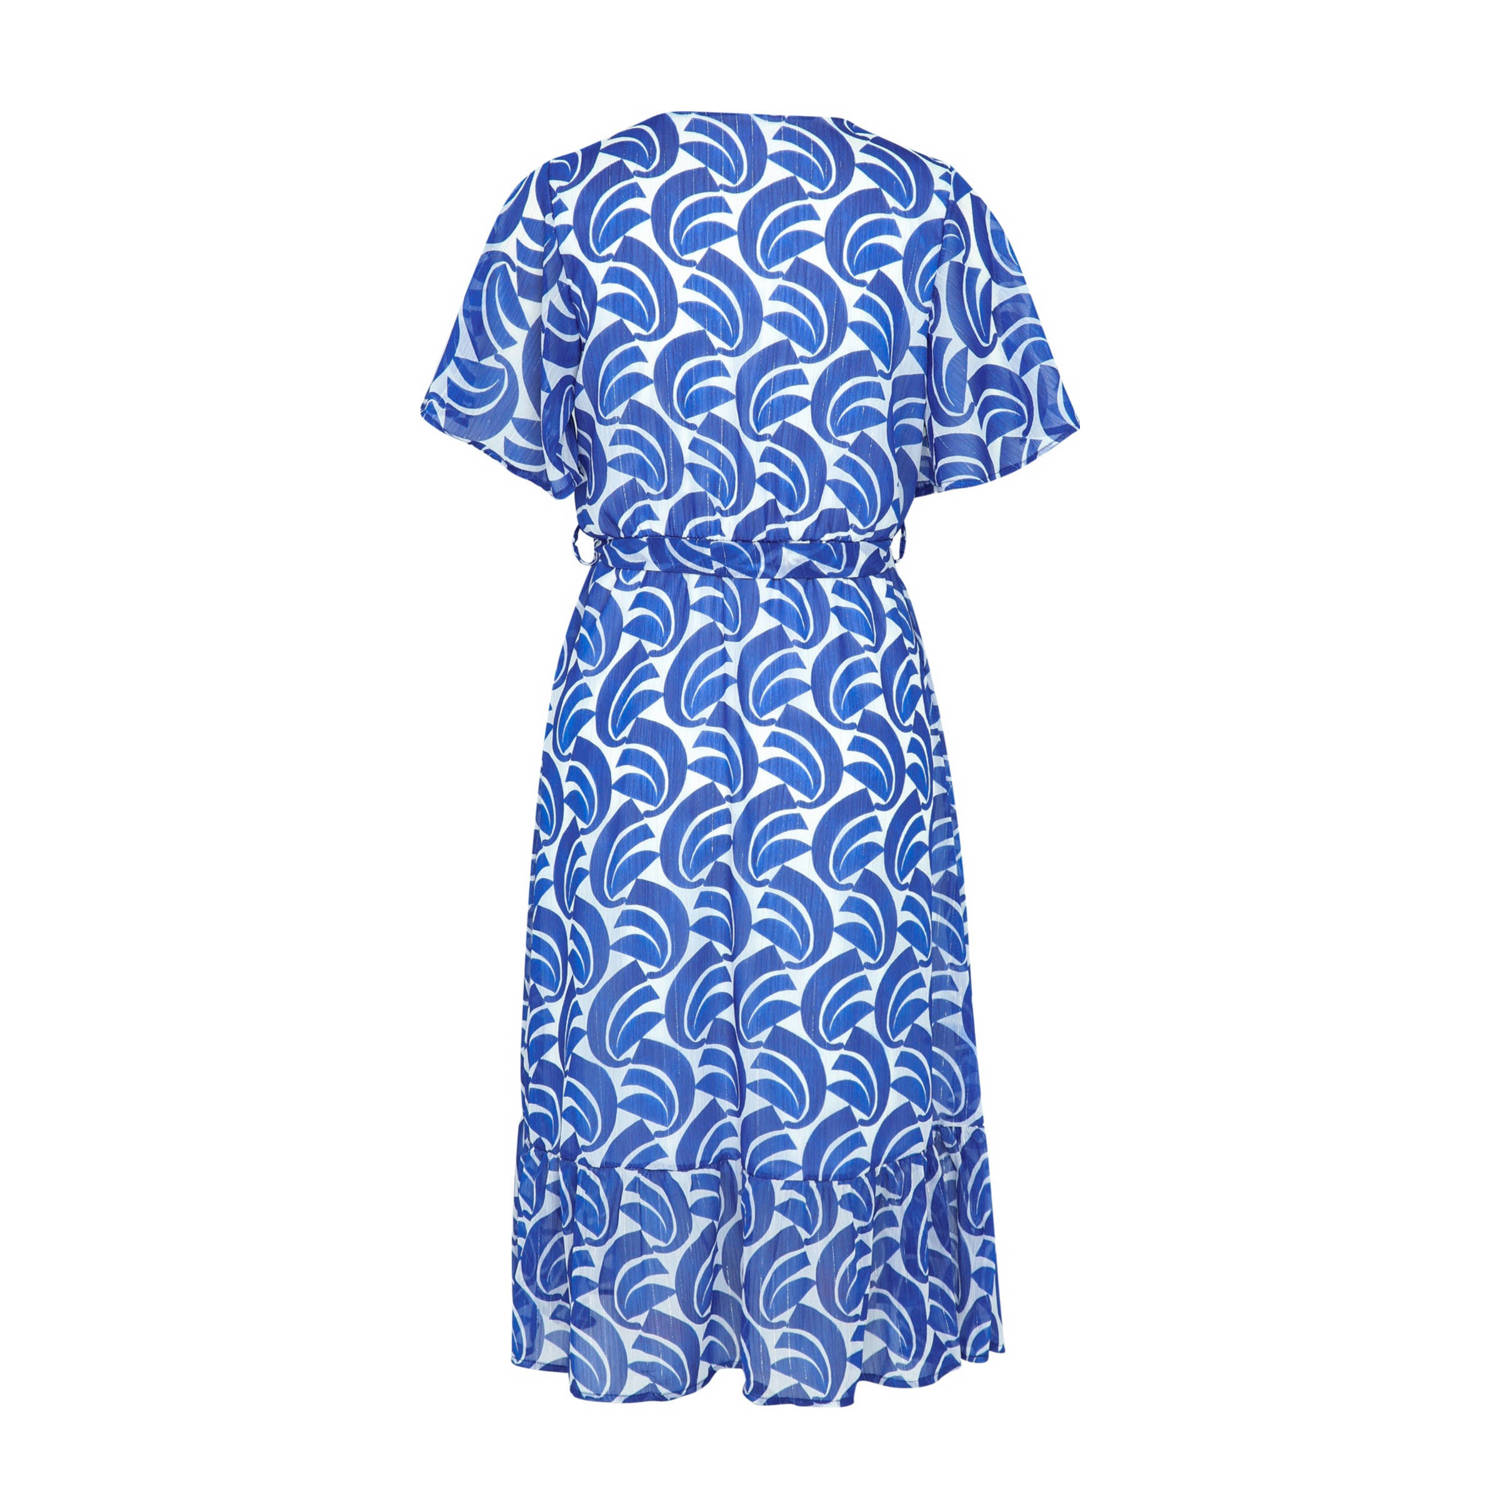 Cassis jurk met all over print blauw wit